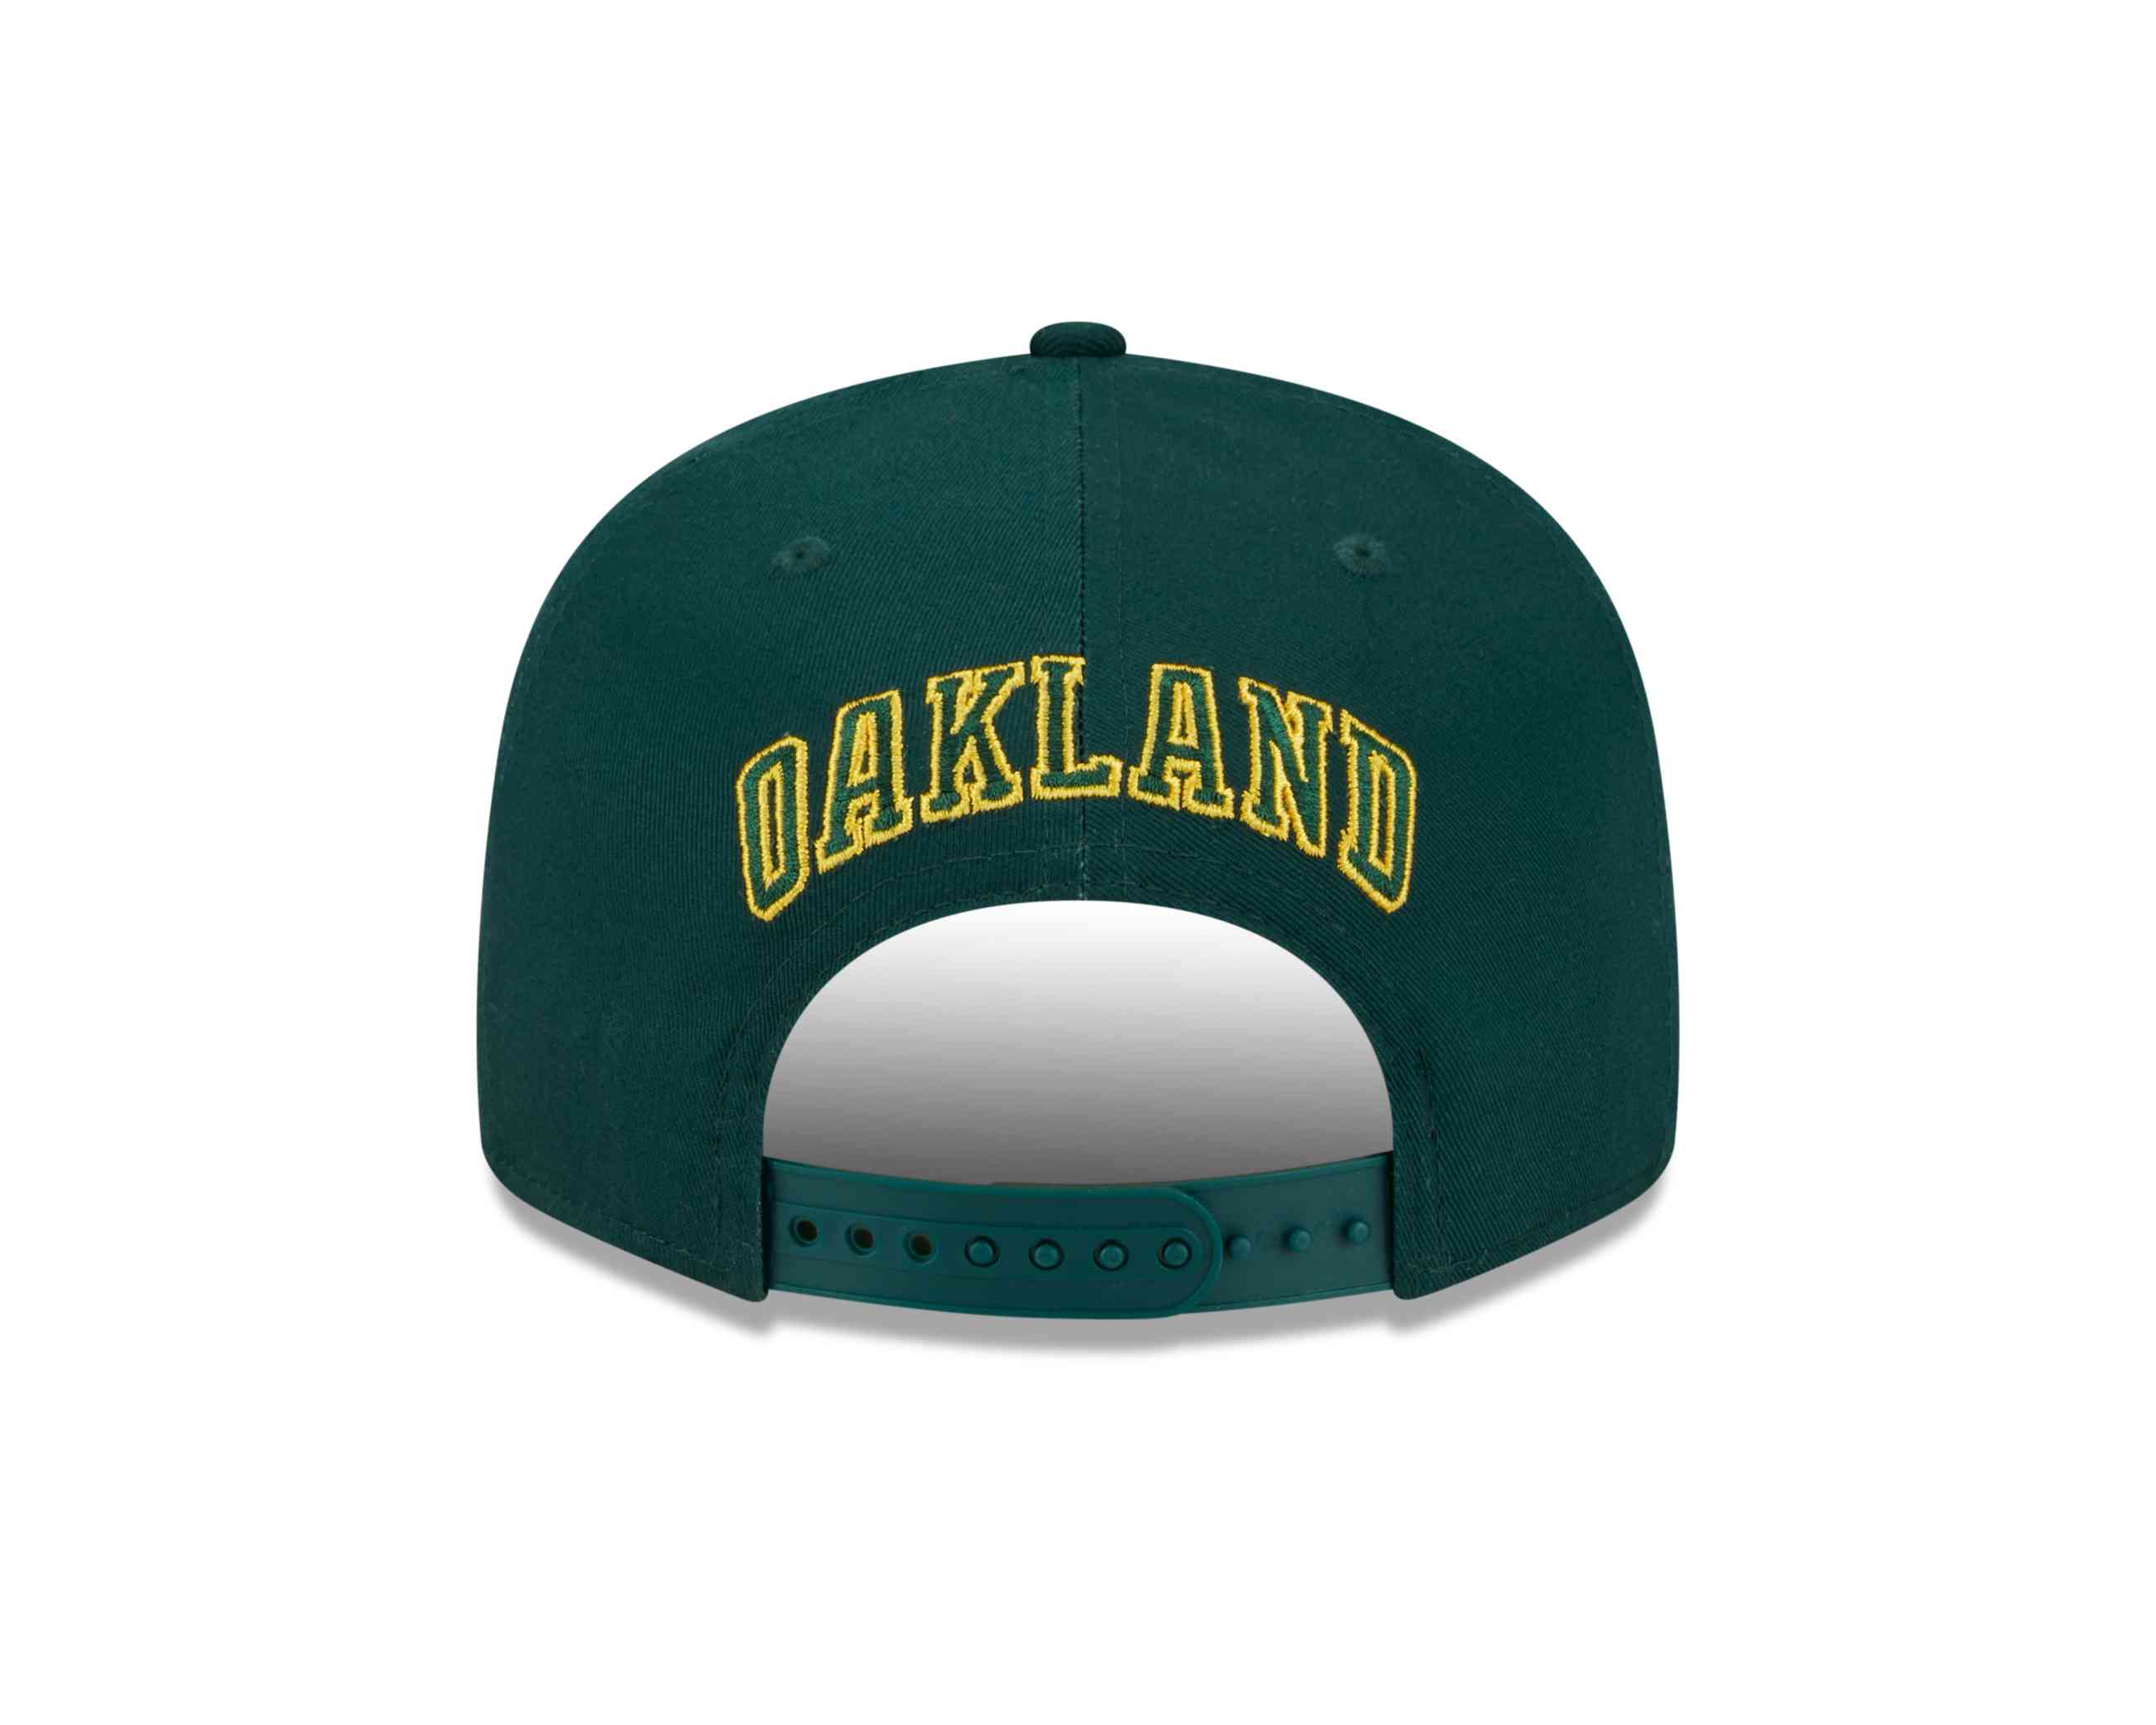 New Era - MLB Oakland Athletics Side Patch 9Fifty Snapback Cap